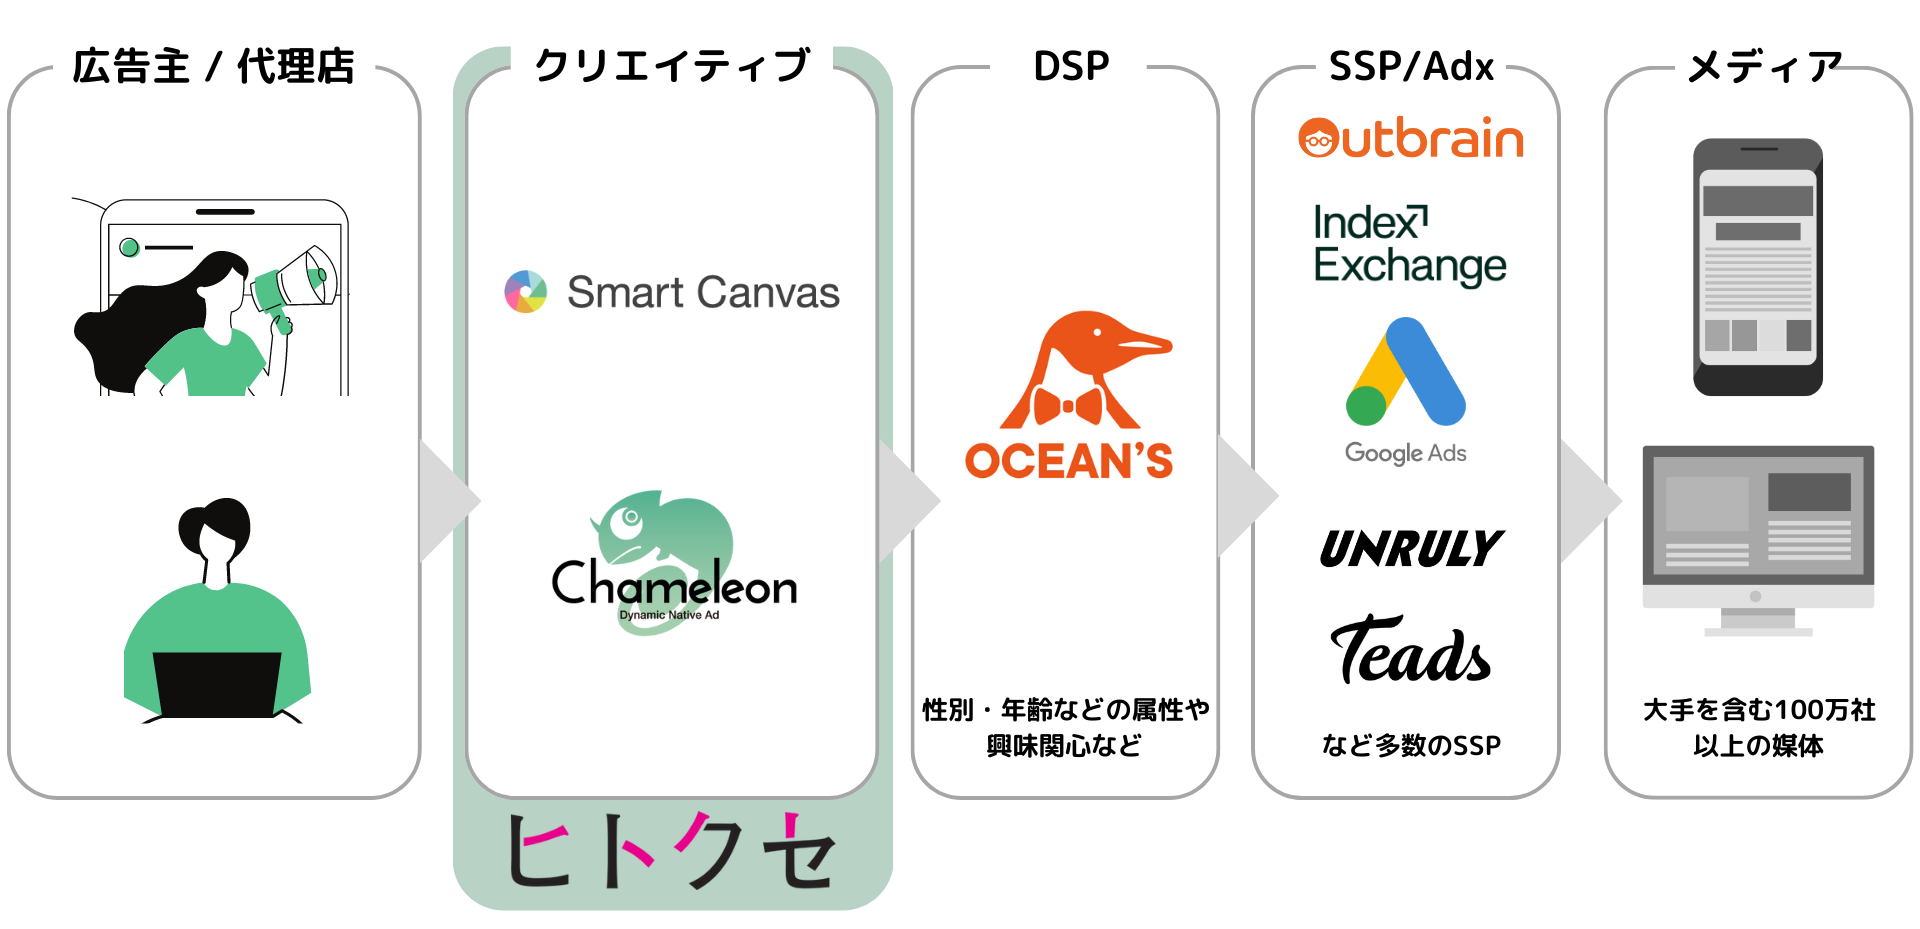 OCEAN’S、「カメレオン」と連携しリッチメディア広告の配信を開始